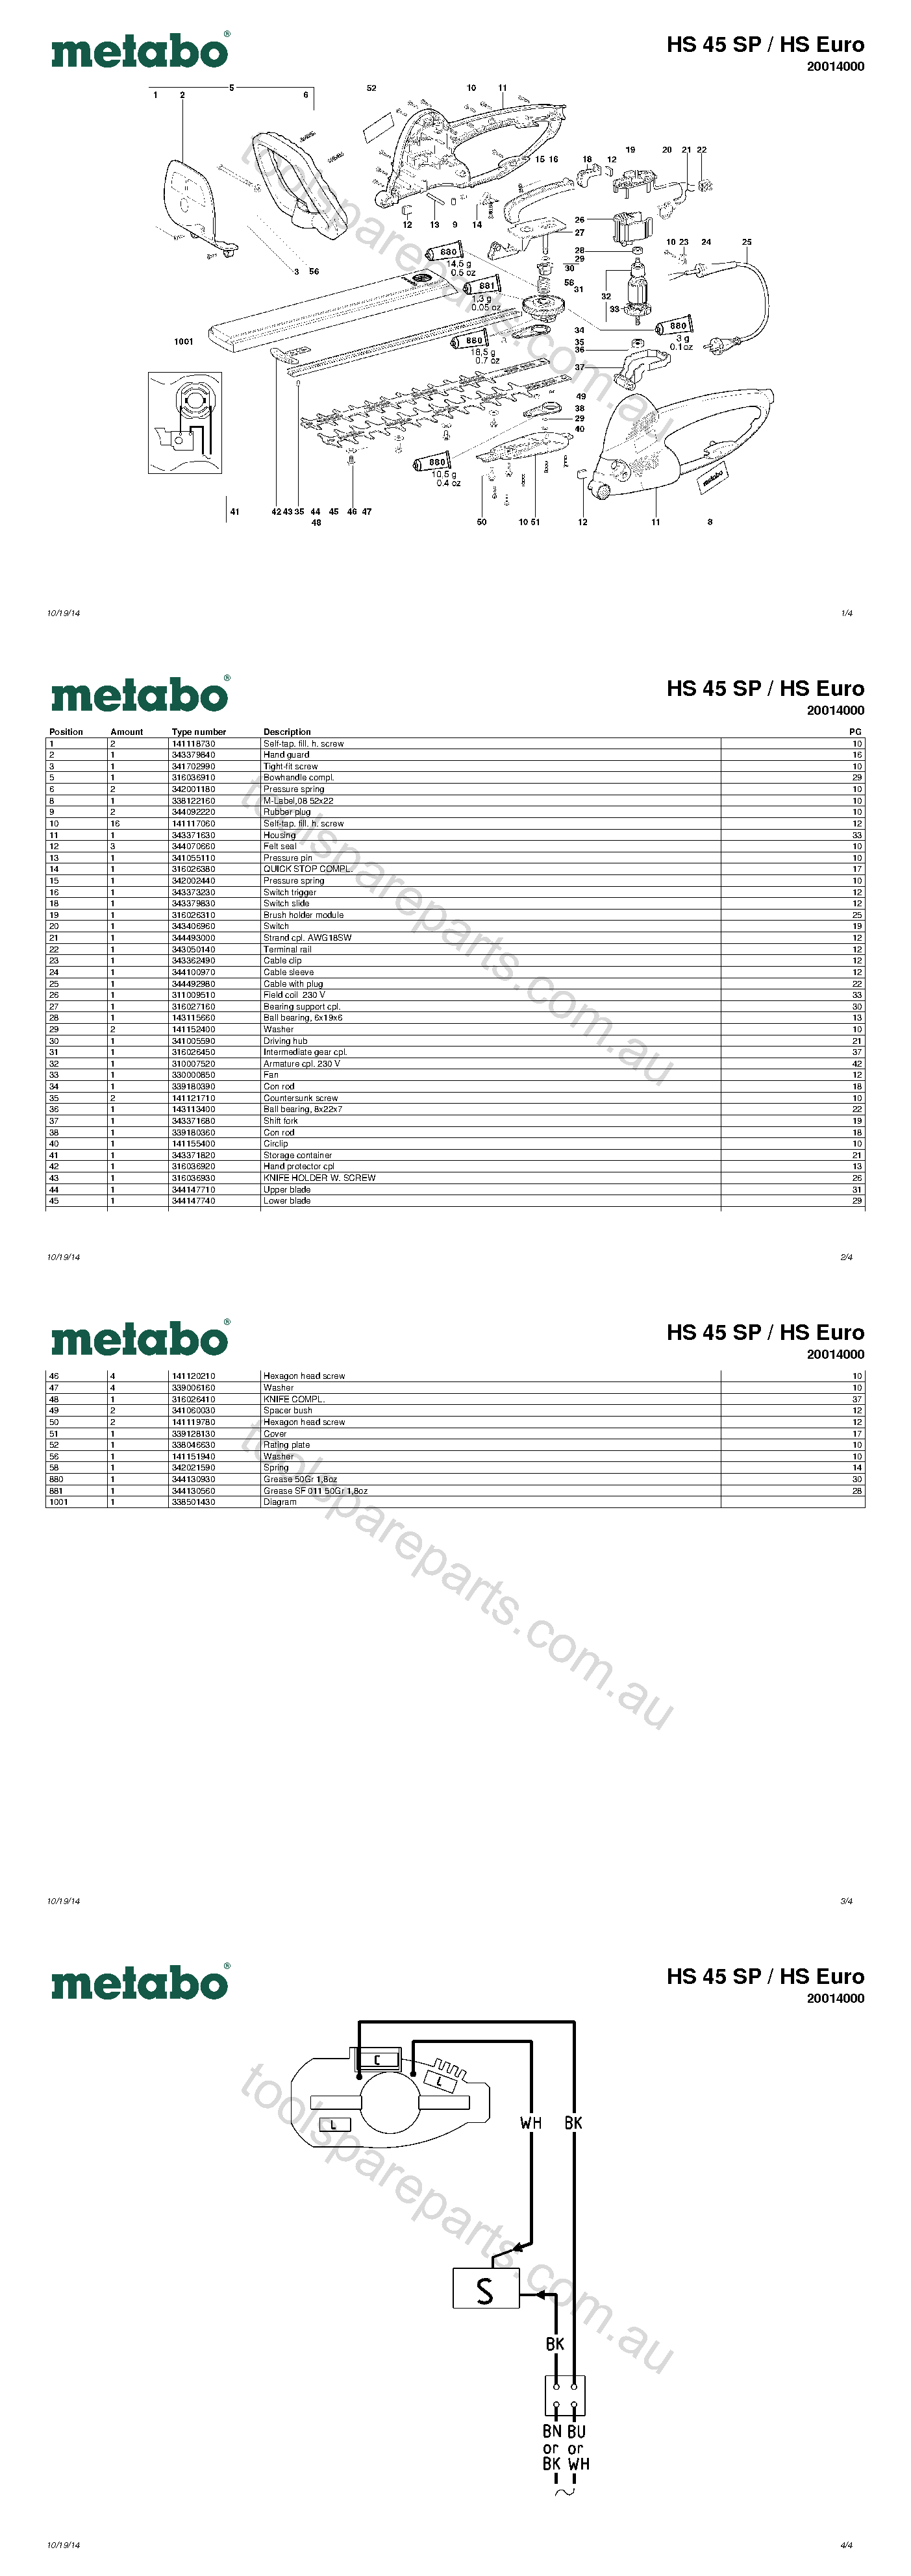 Metabo HS 45 SP / HS Euro 20014000  Diagram 1